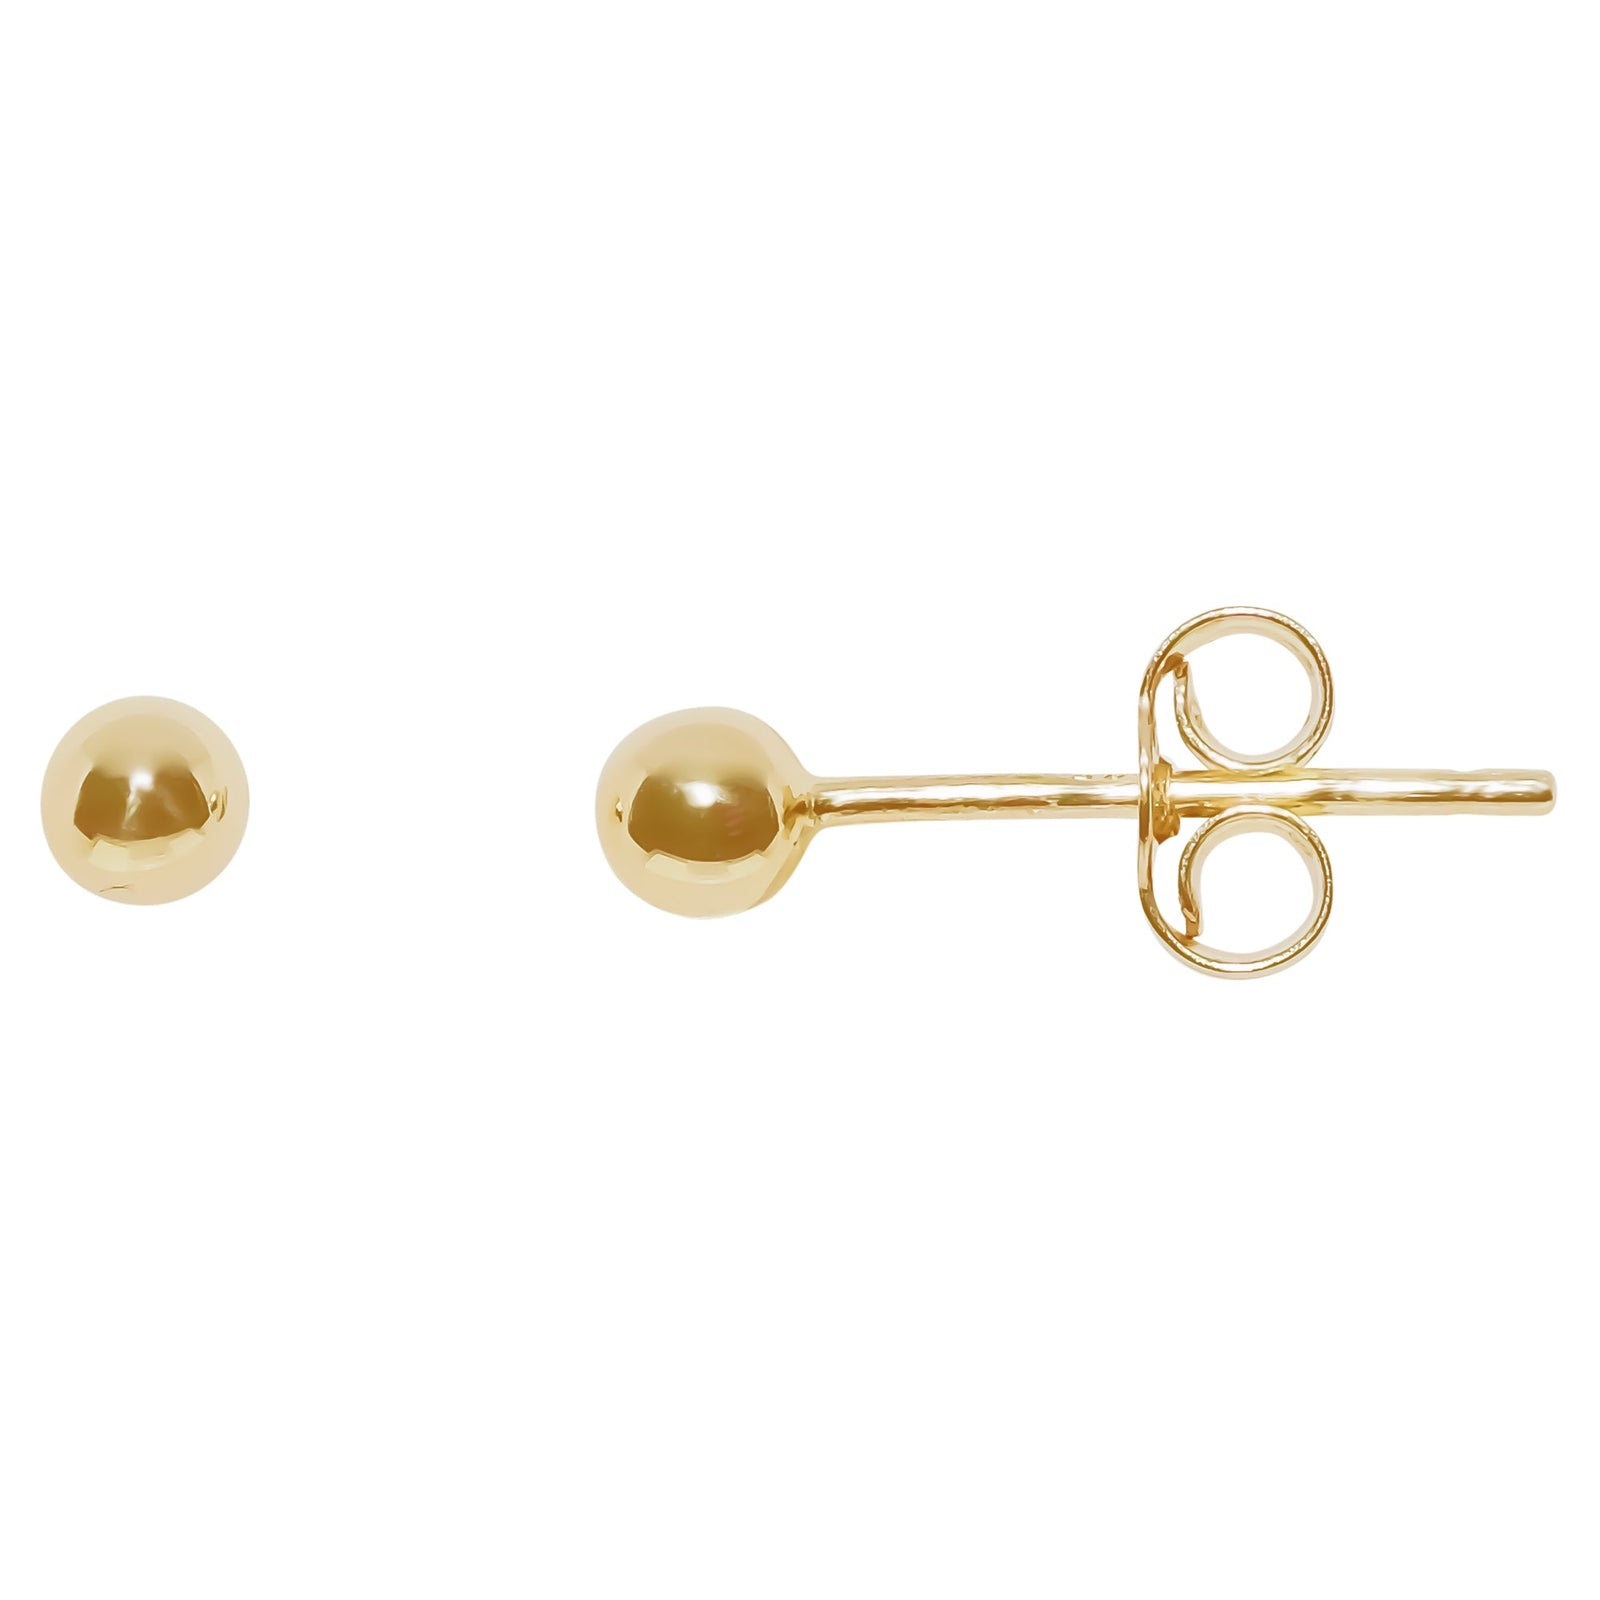 9ct gold 3mm ball stud earrings